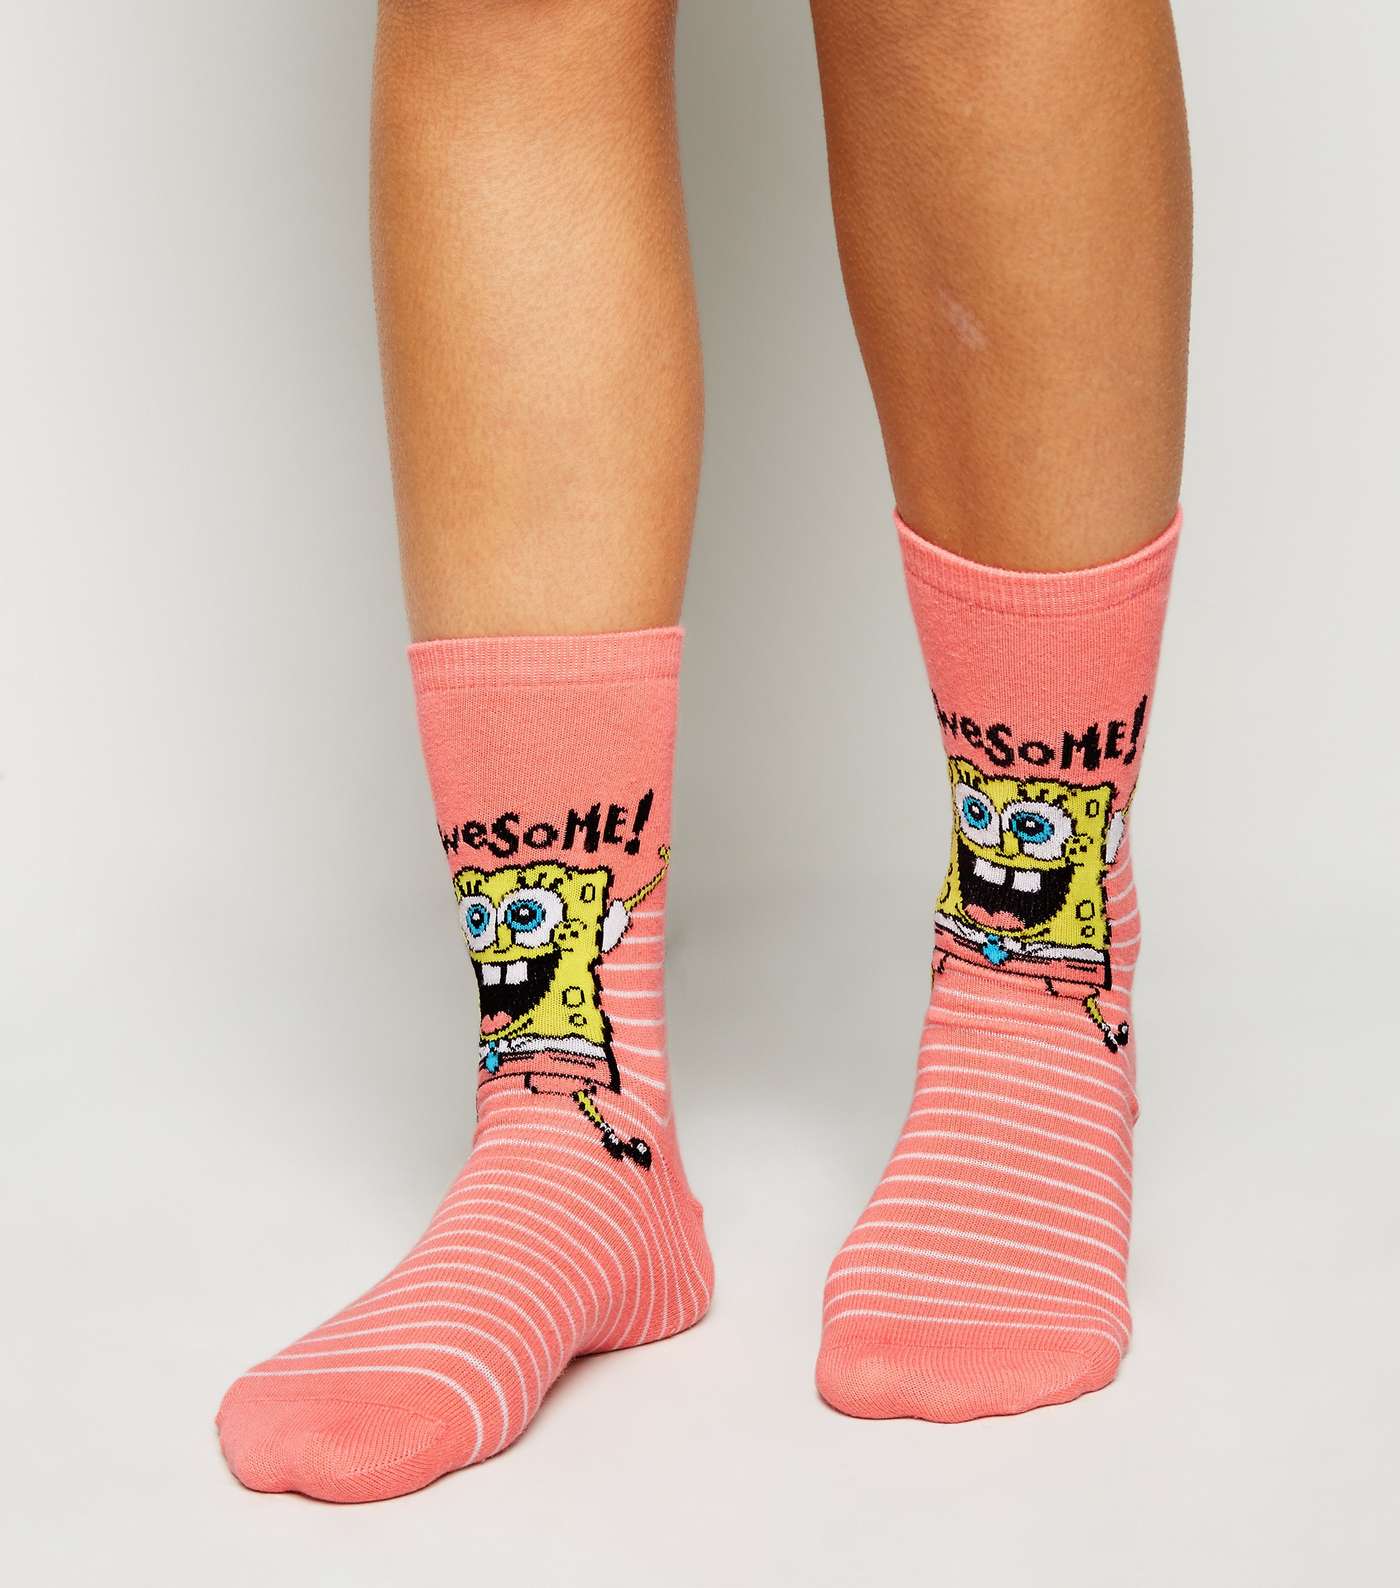 Coral Stripe Awesome Spongebob Socks Image 2